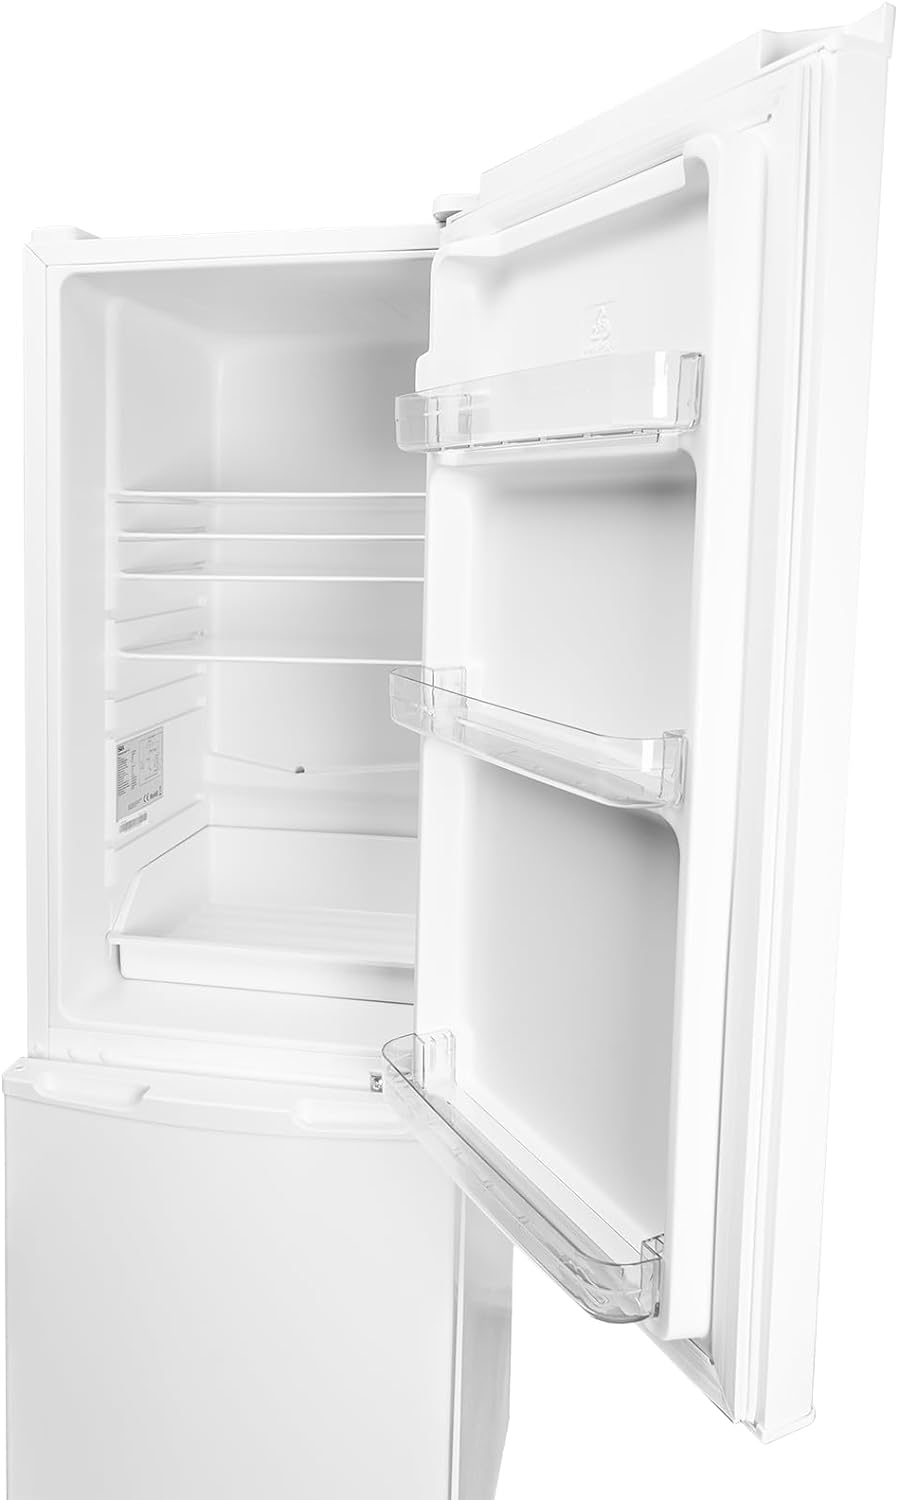 SIA SFF1570W Freestanding stylish white combi fridge freezer 182L capacity, 3 shelves, 3 freezer compartments, reversible door, adjustable legs, W474 x D528 x H1570, 2 Year Manufacturers Guarantee   Import  Single ASIN  Import  Multiple ASIN ×Pro - Amazing Gadgets Outlet